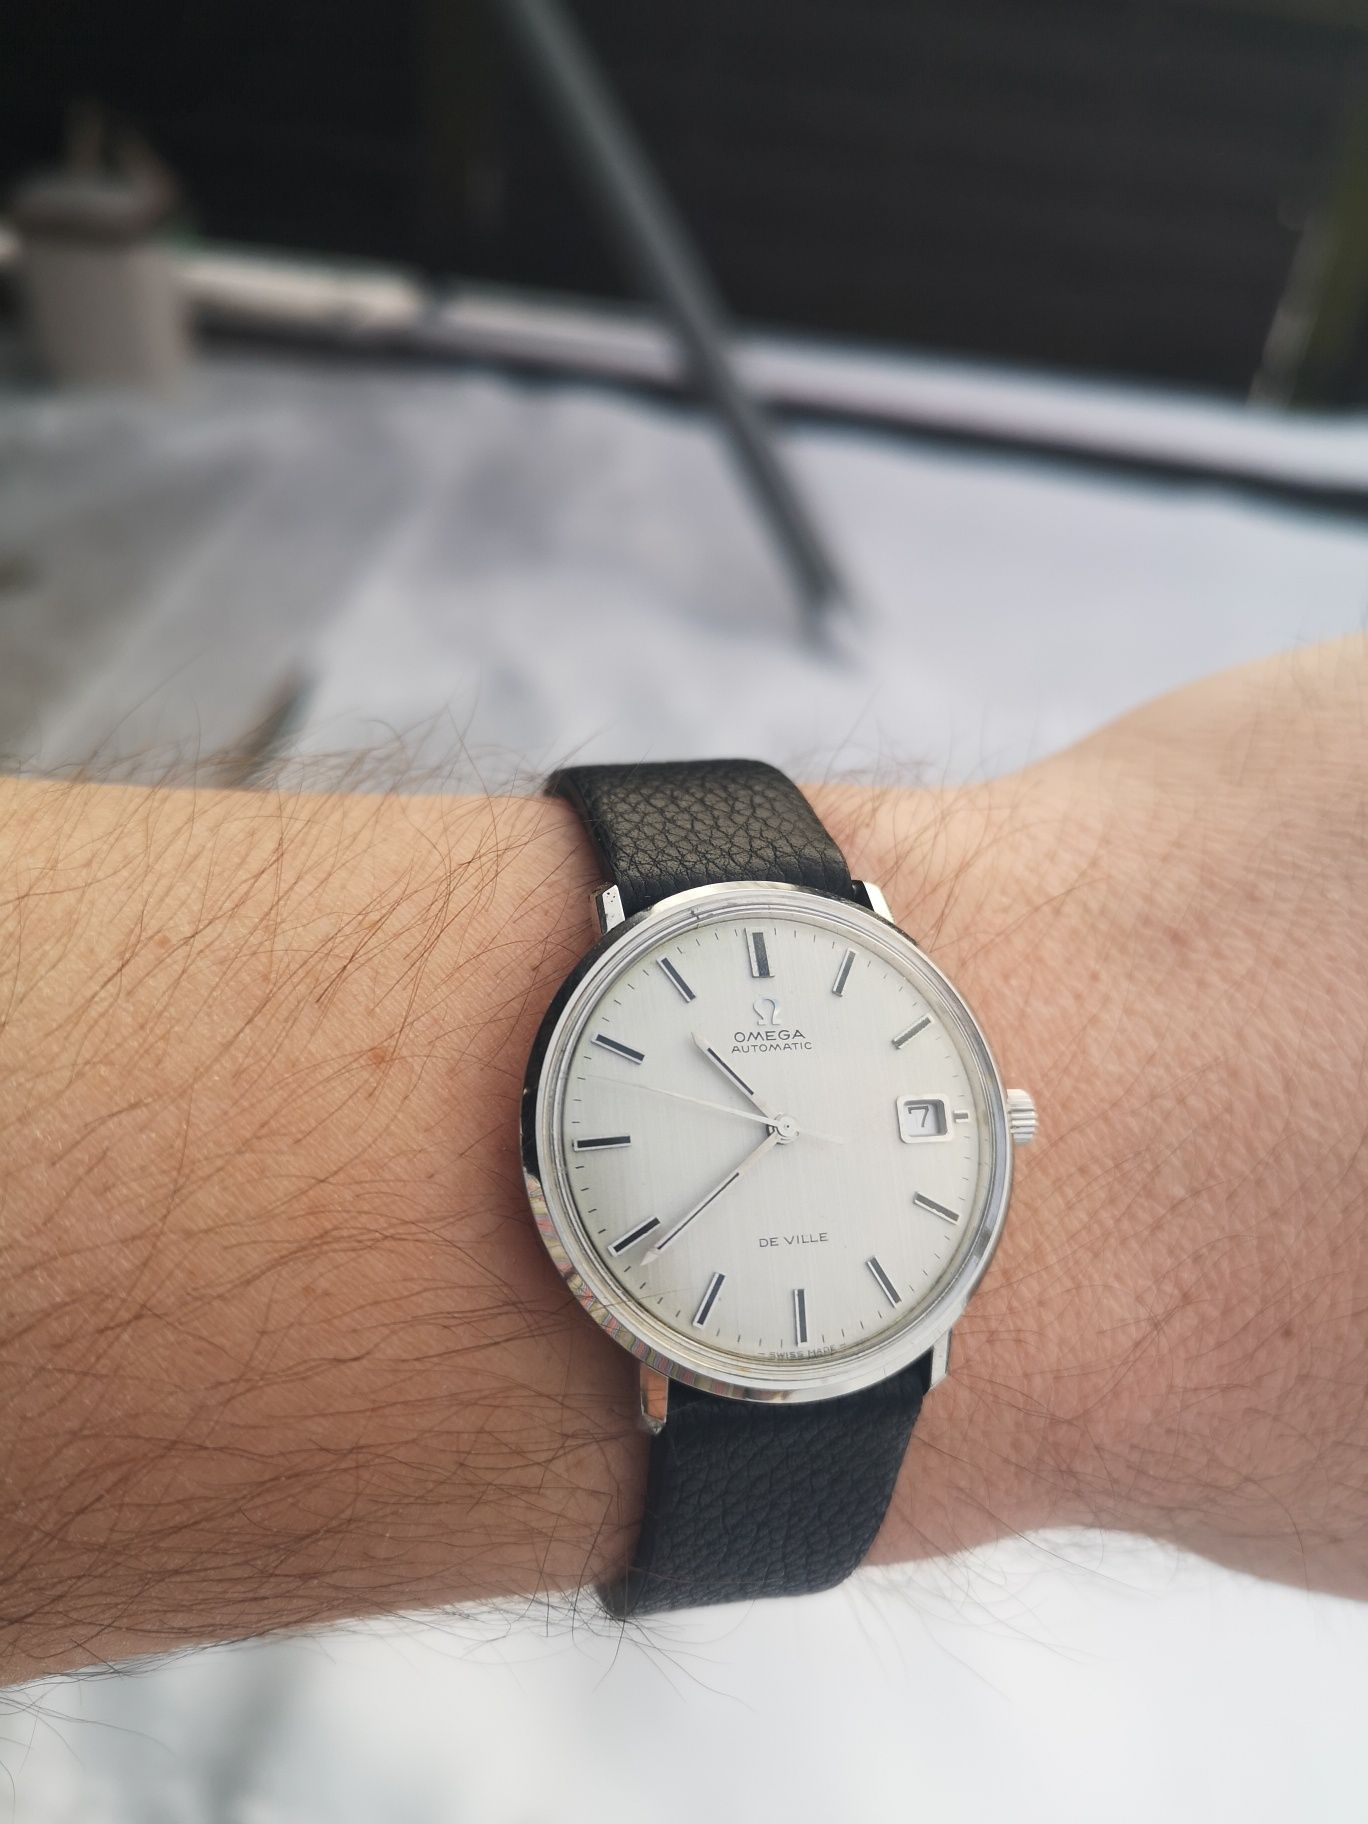 Omega De Ville automat zegarek męski piękny stan bdb